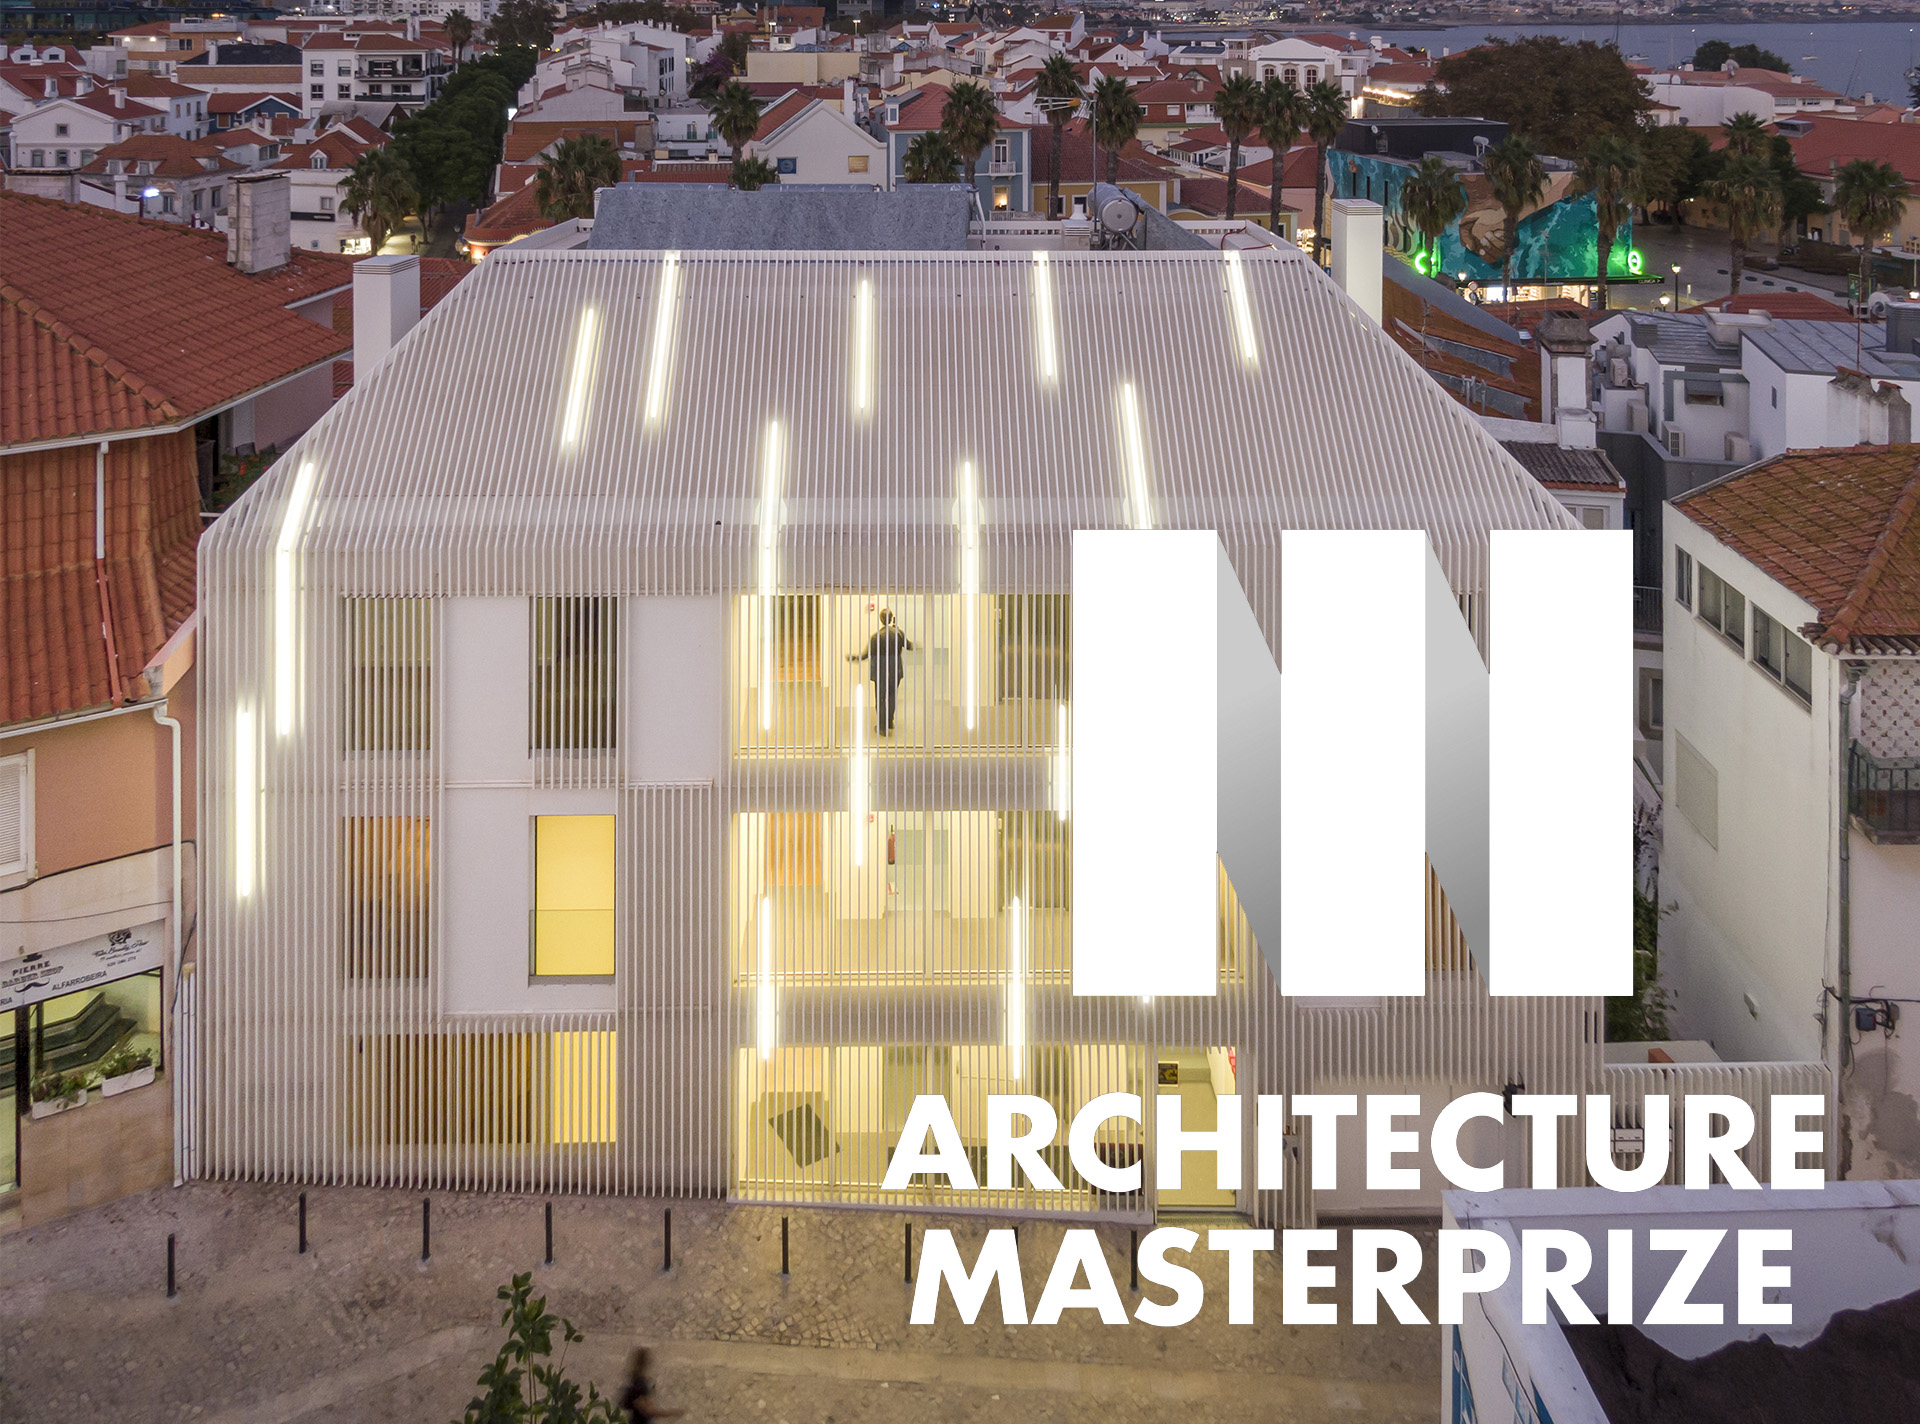 Cacto Velho Building wins Architecture Masterprize Award